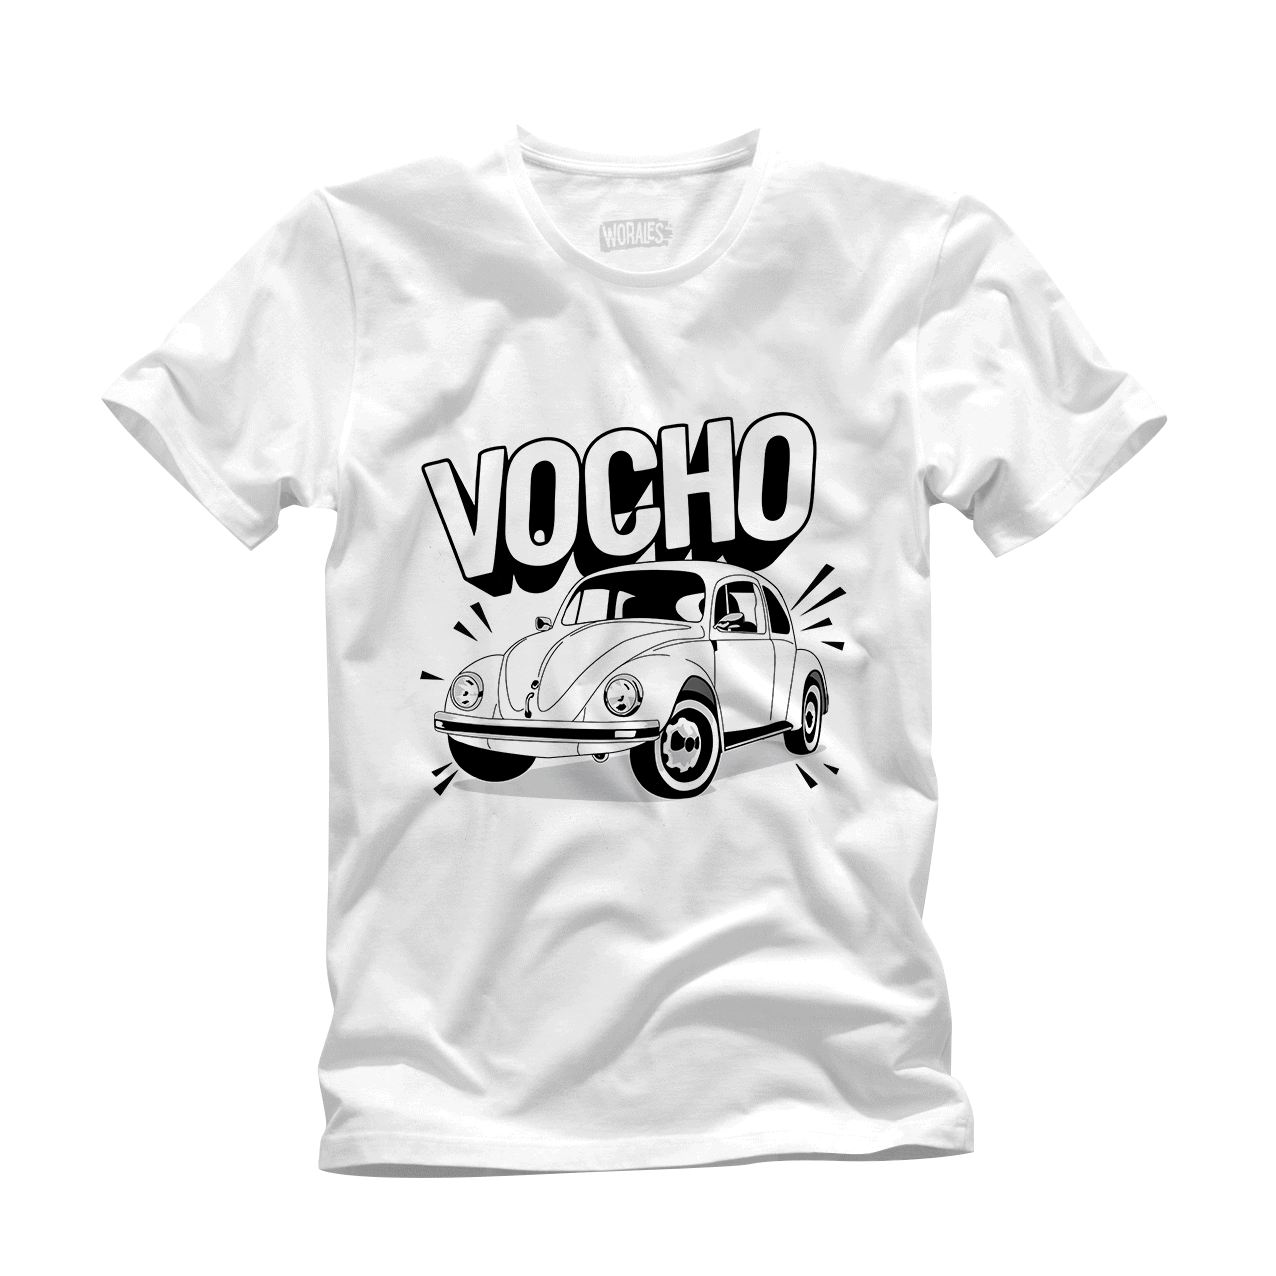 Vocho (Kids)